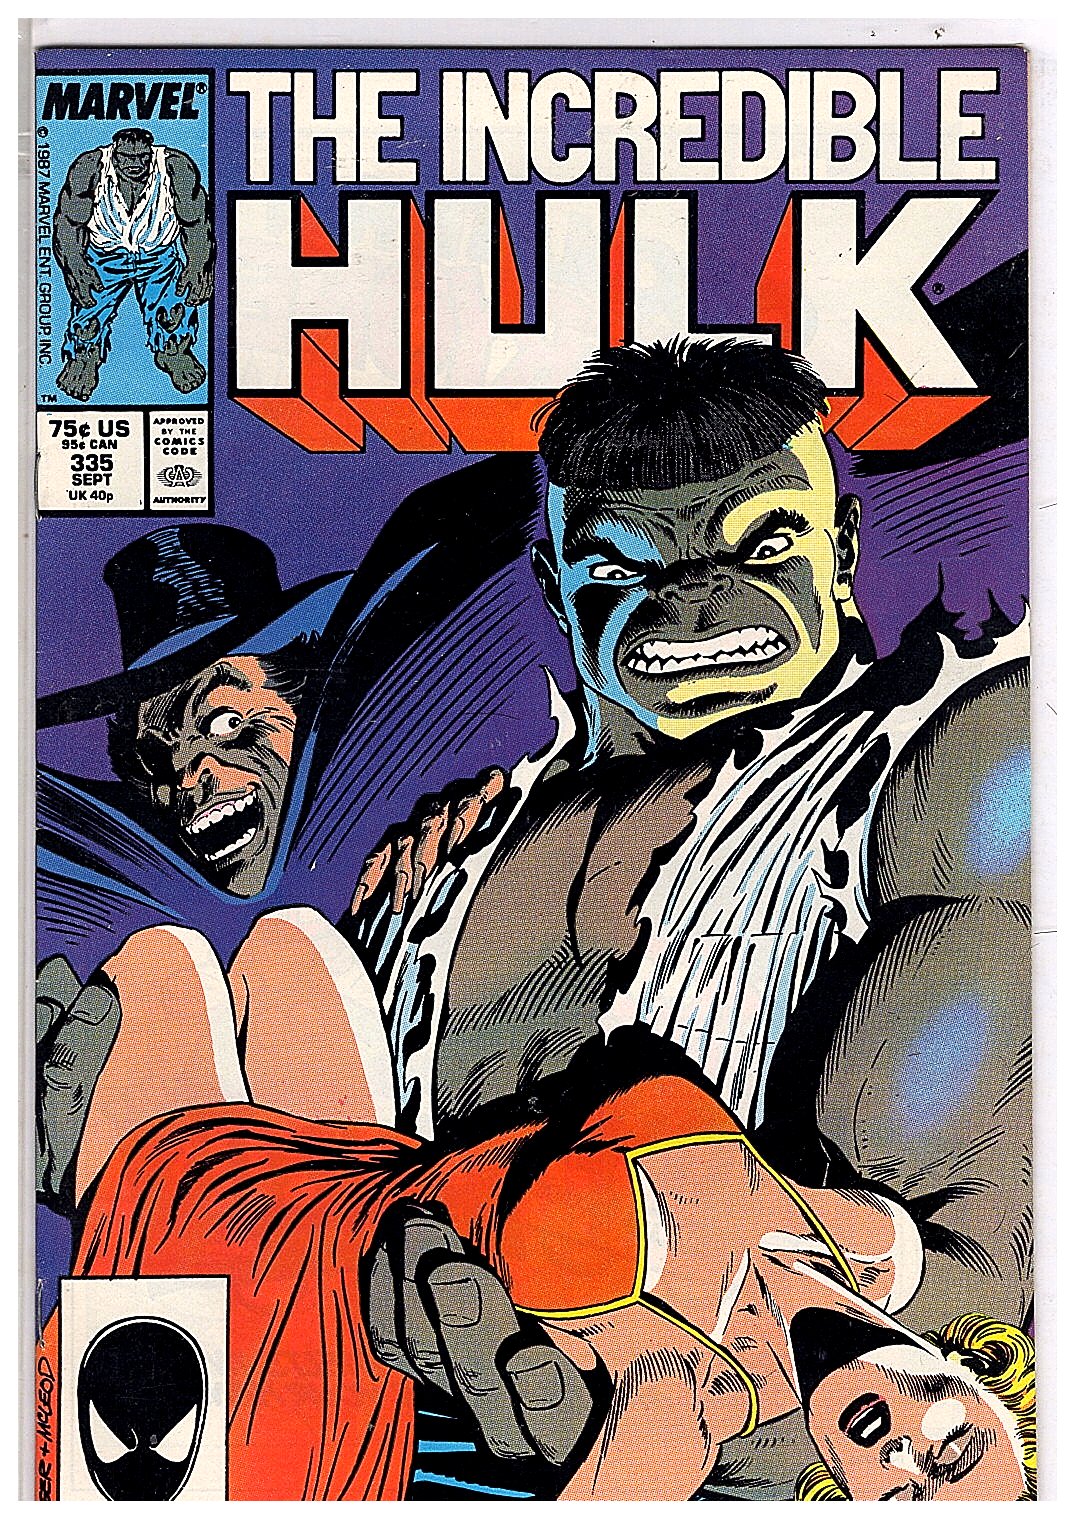 The Incredible Hulk #335